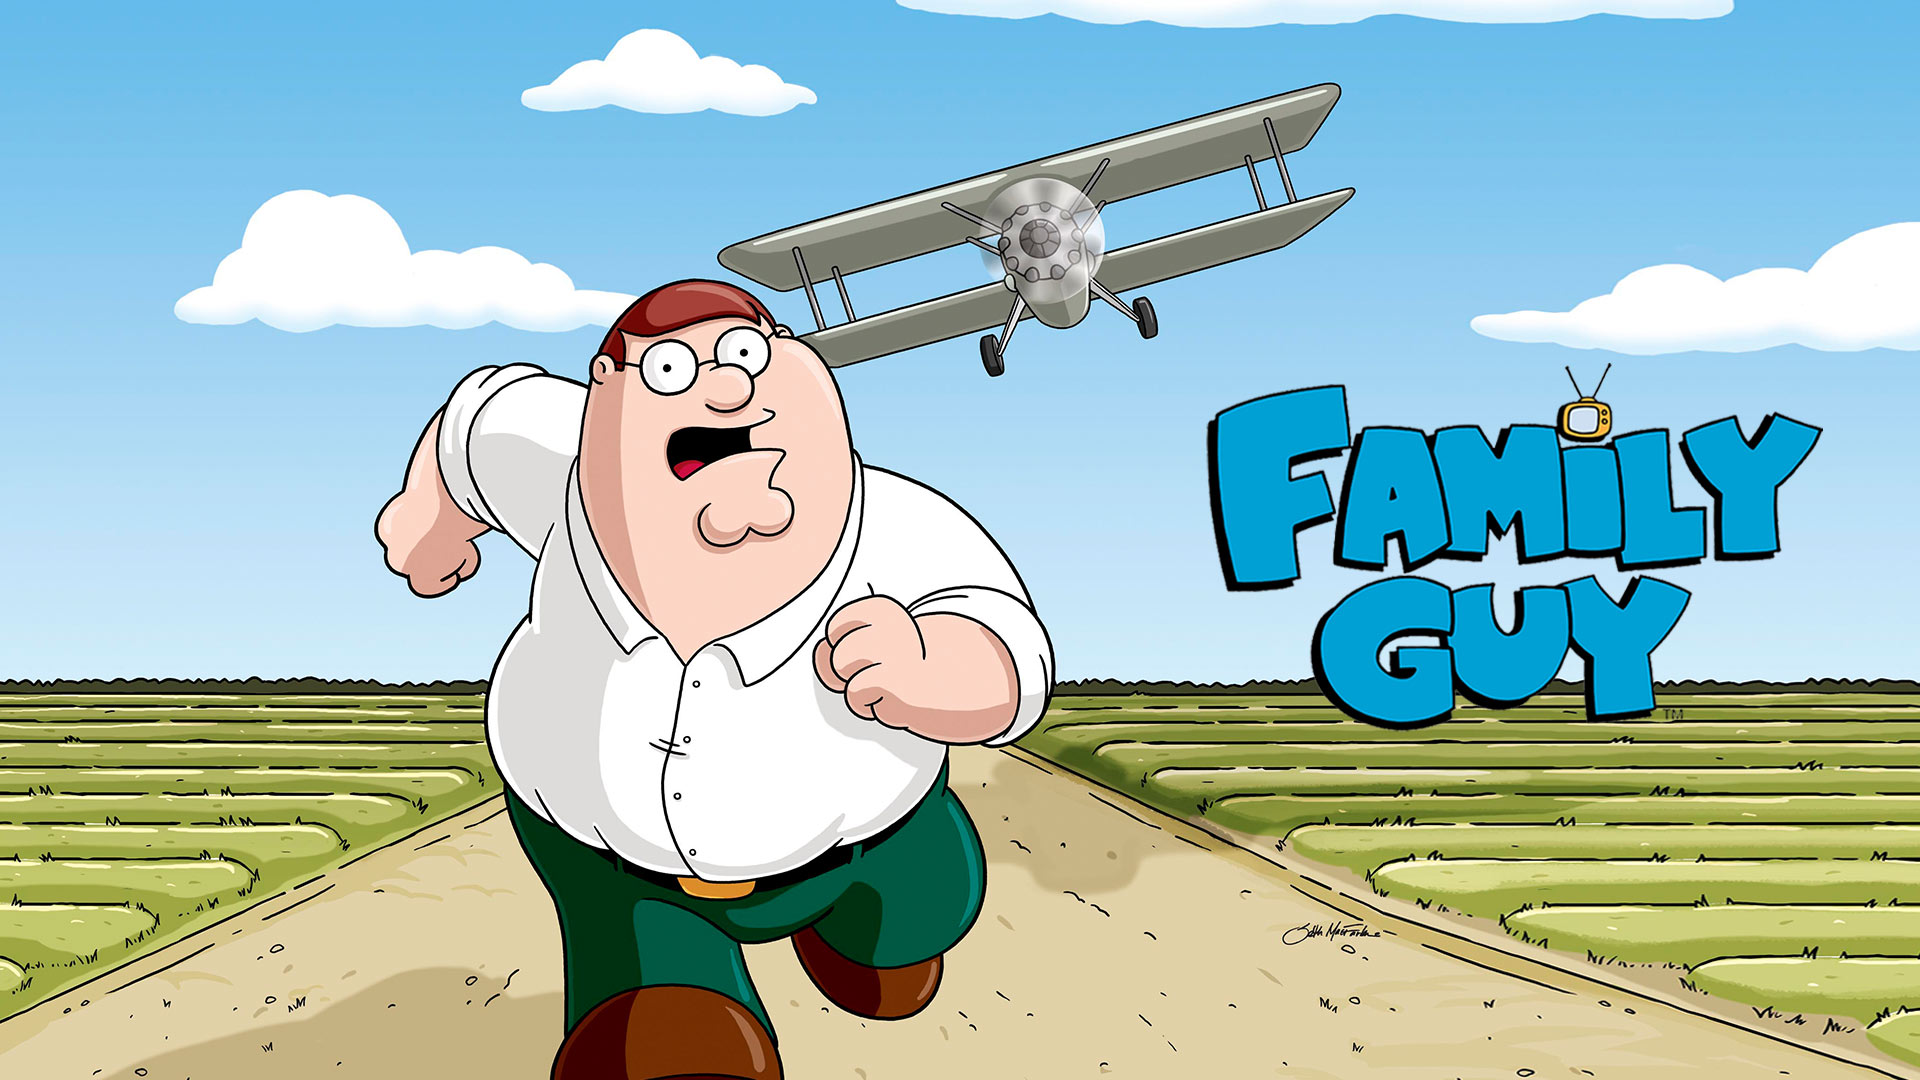 Watch All Seasons of Family Guy on Disney+ Hotstar